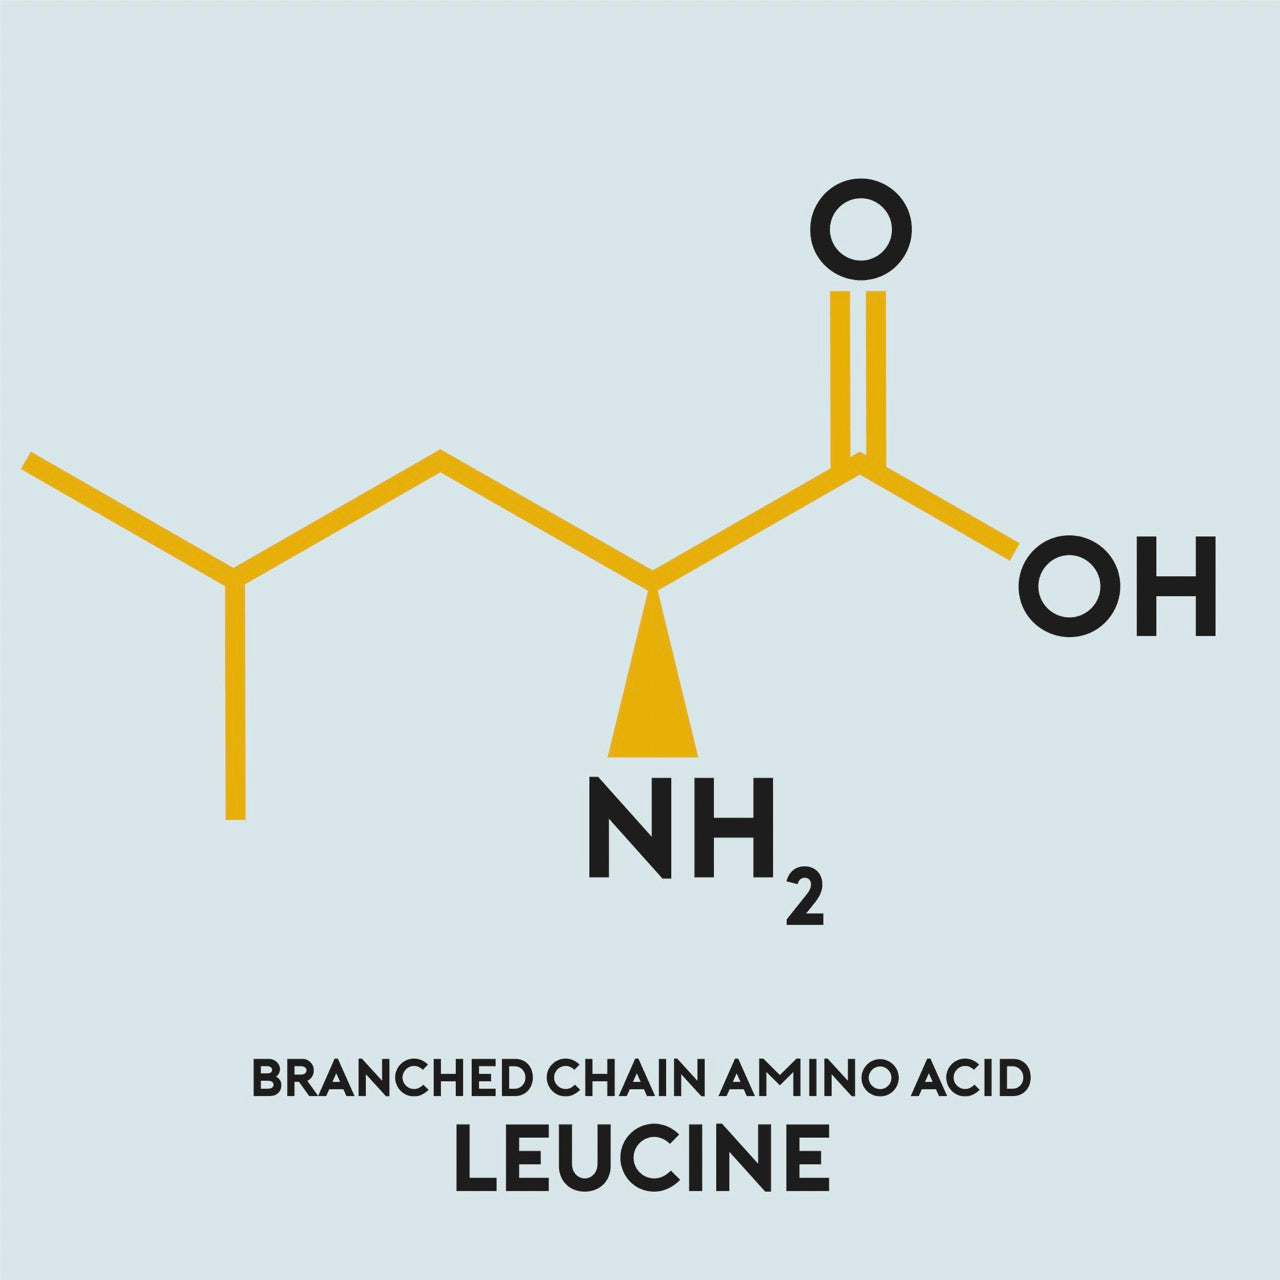 BCAA Leucine structure| Understanding Protein & role of amino acids